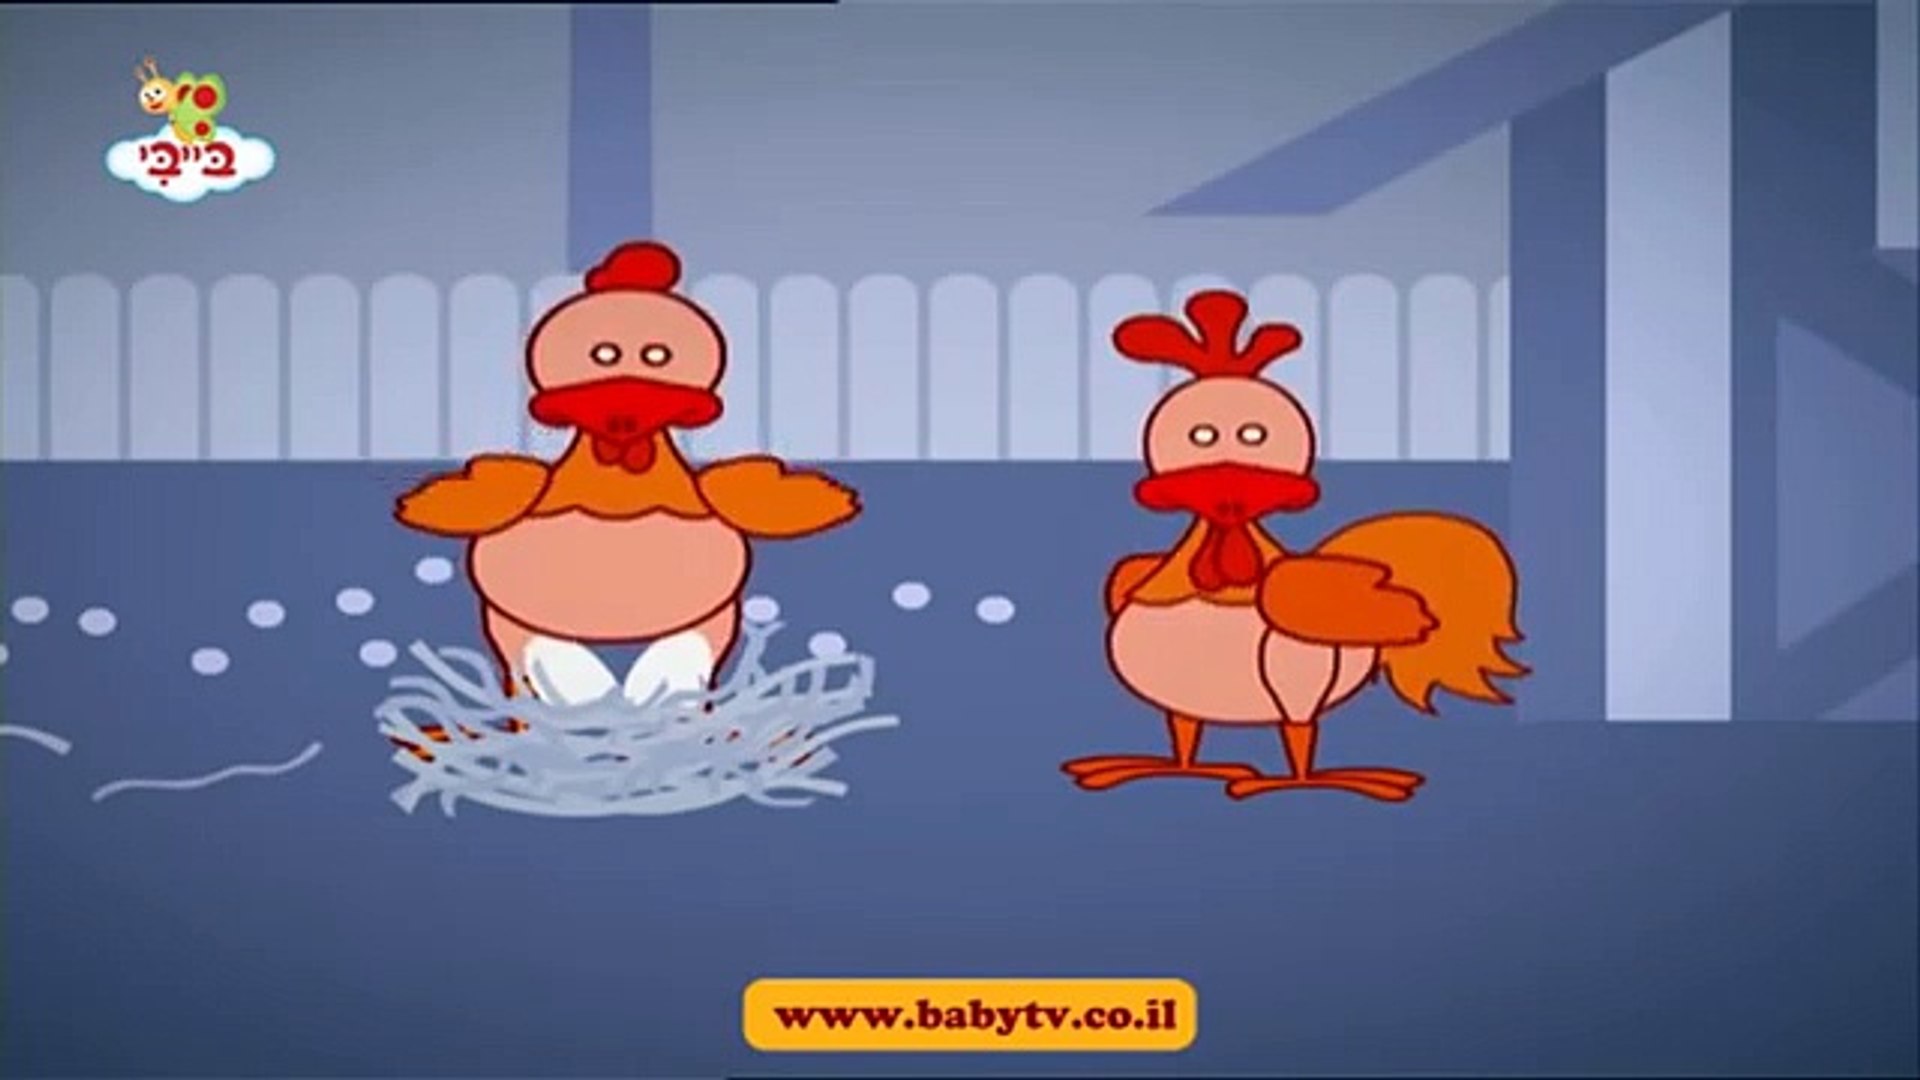 BabyTV Israel Louies friends Animals (english) - Dailymotion Video